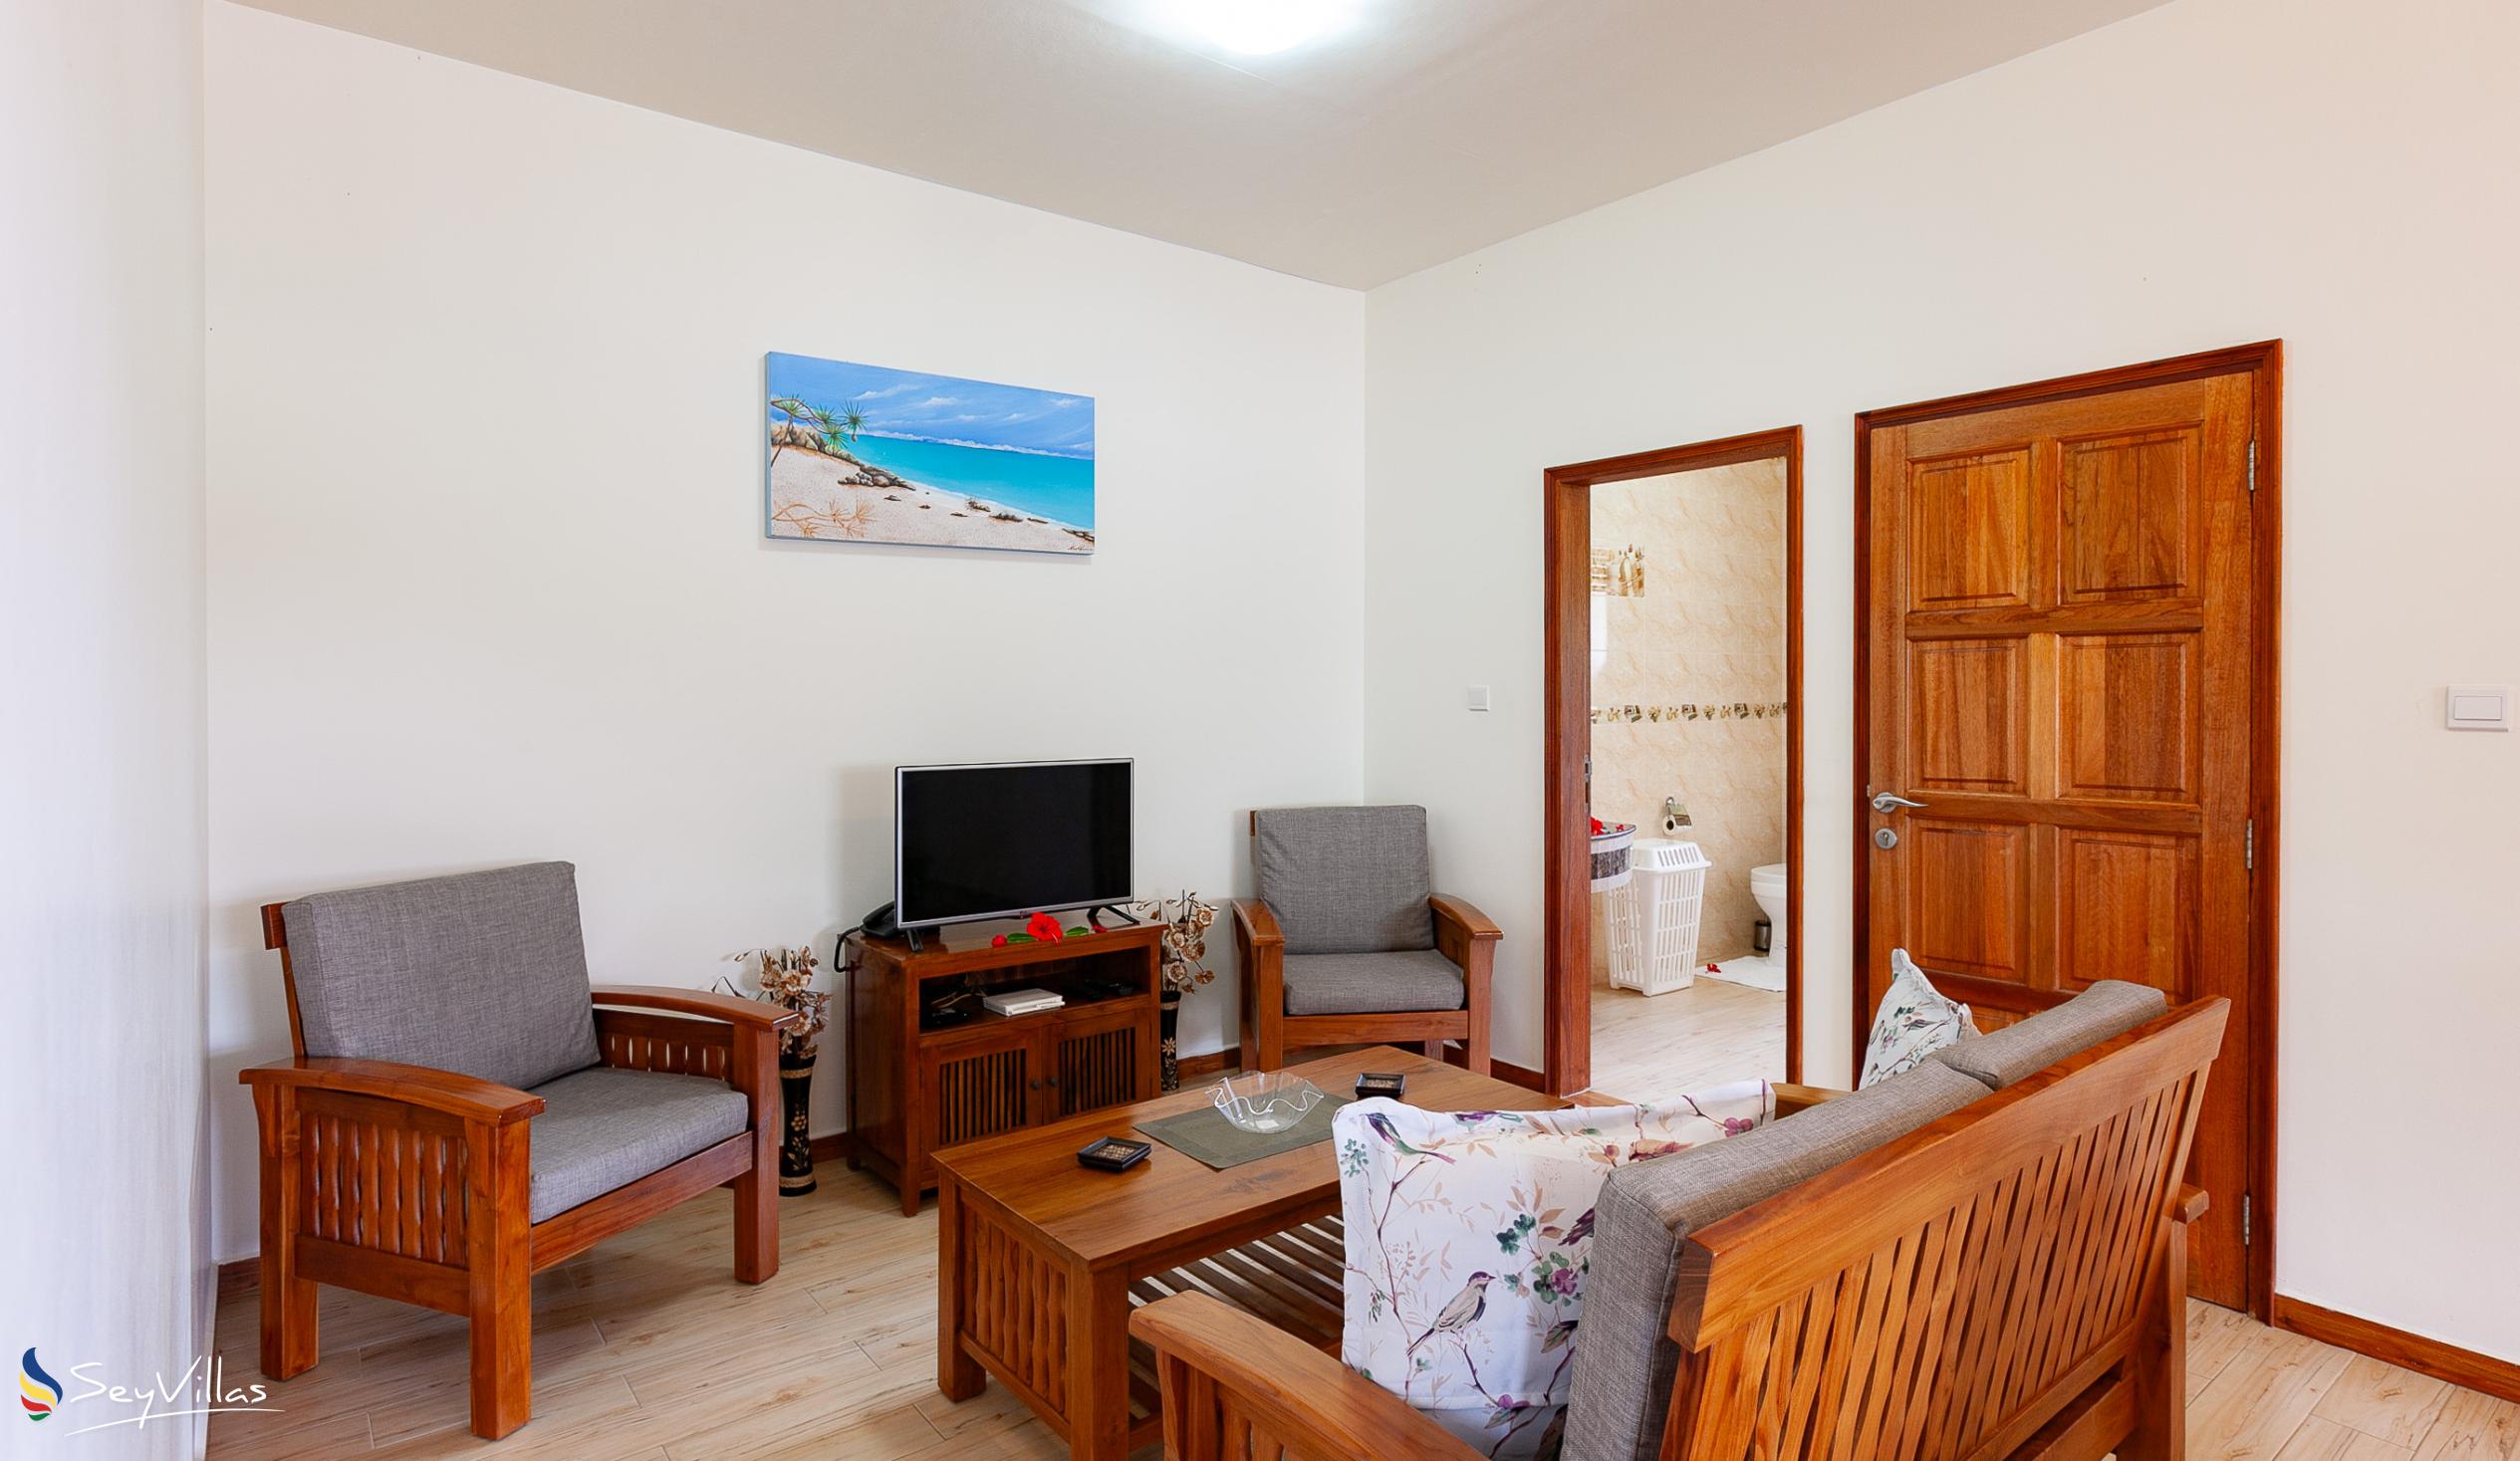 Foto 57: Seashell Beach Villa - Appartement 2 chambres - Praslin (Seychelles)